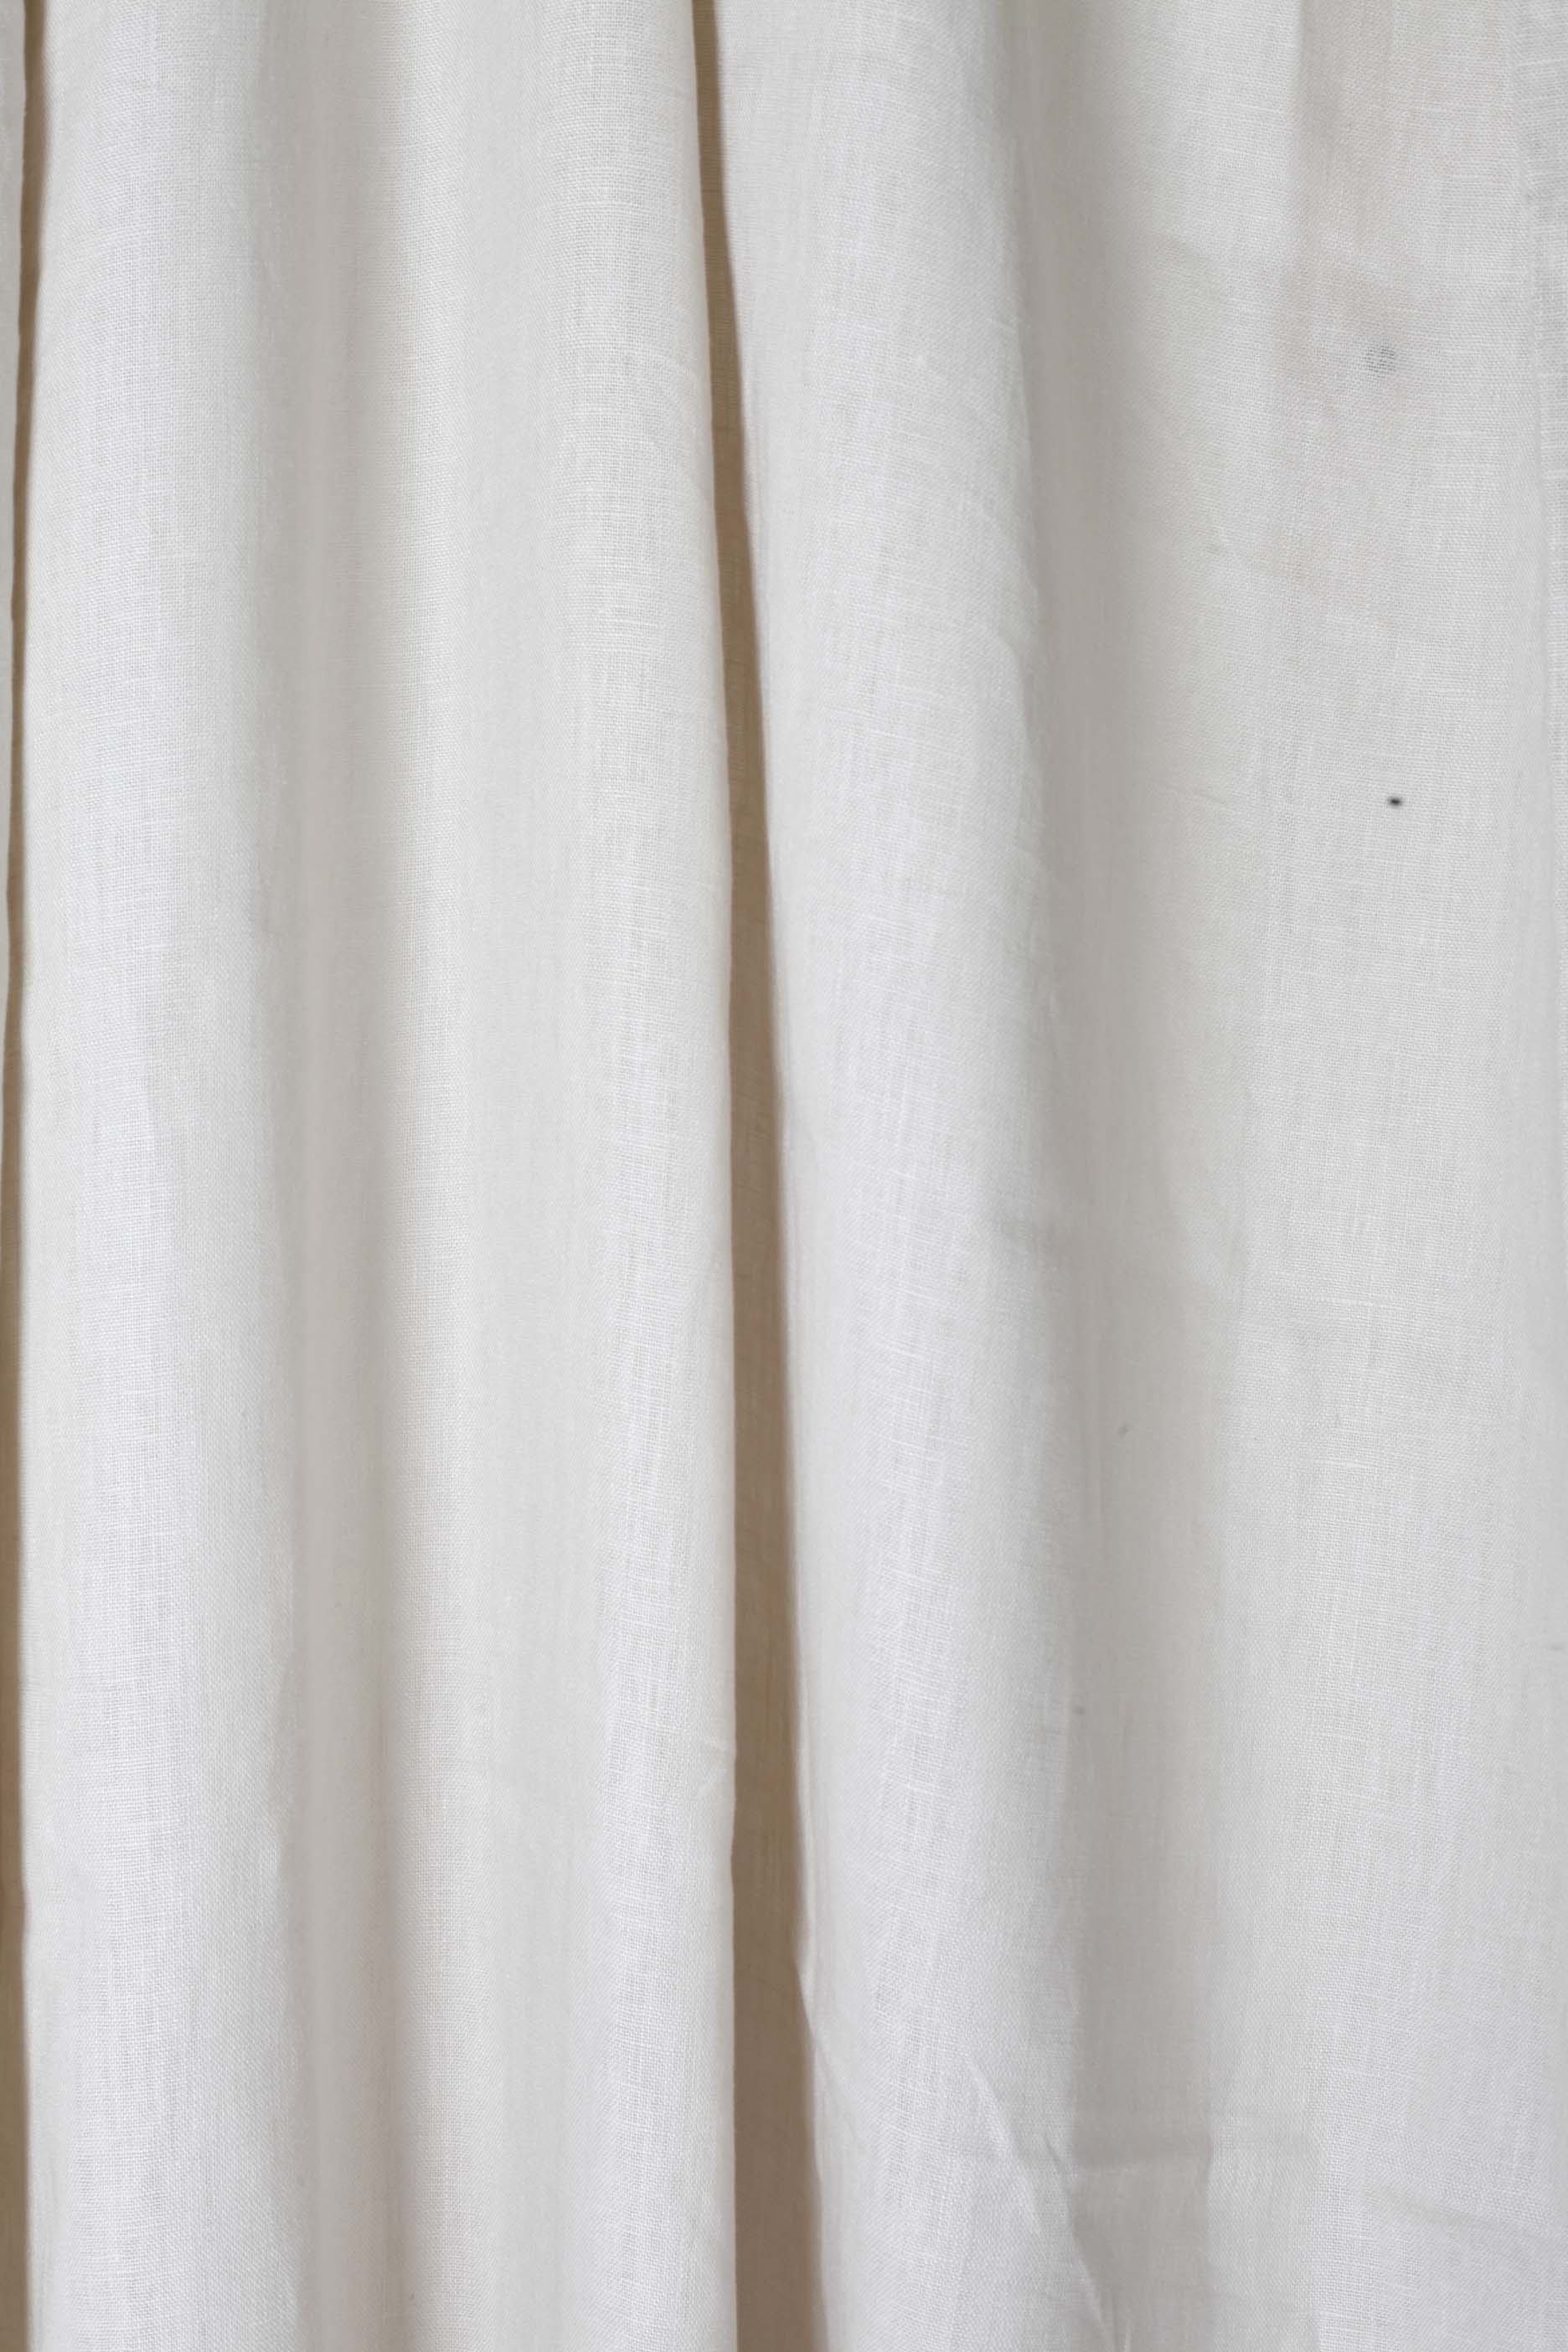 Beige Linen Curtains 1 Pair